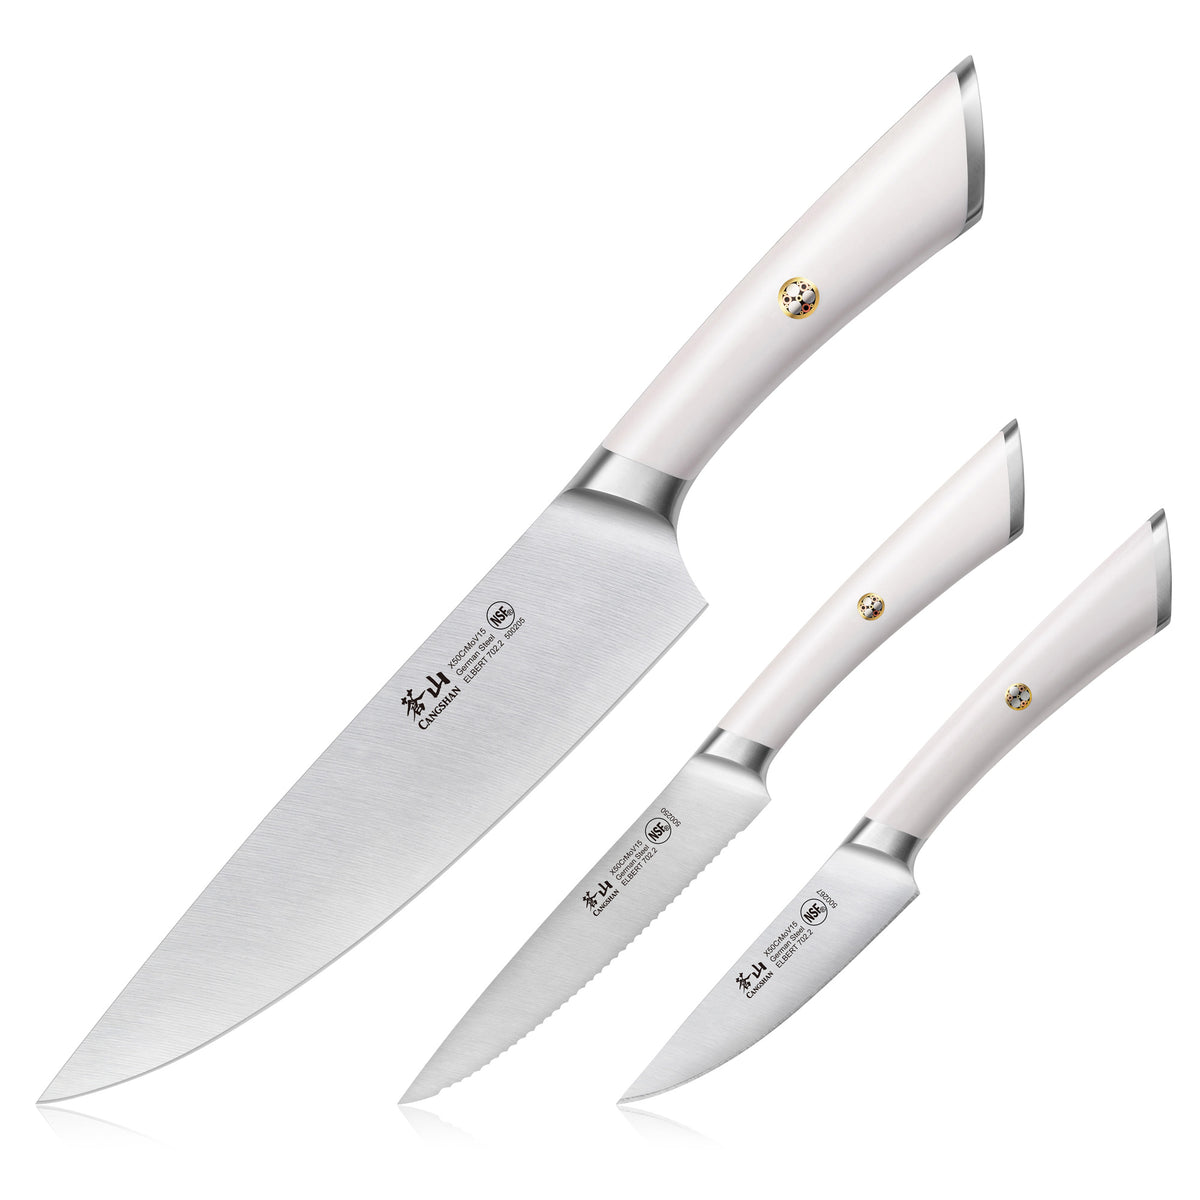 Cangshan Elbert Series German Steel Forged 6-Piece BBQ Knife Set – ShopEZ  USA